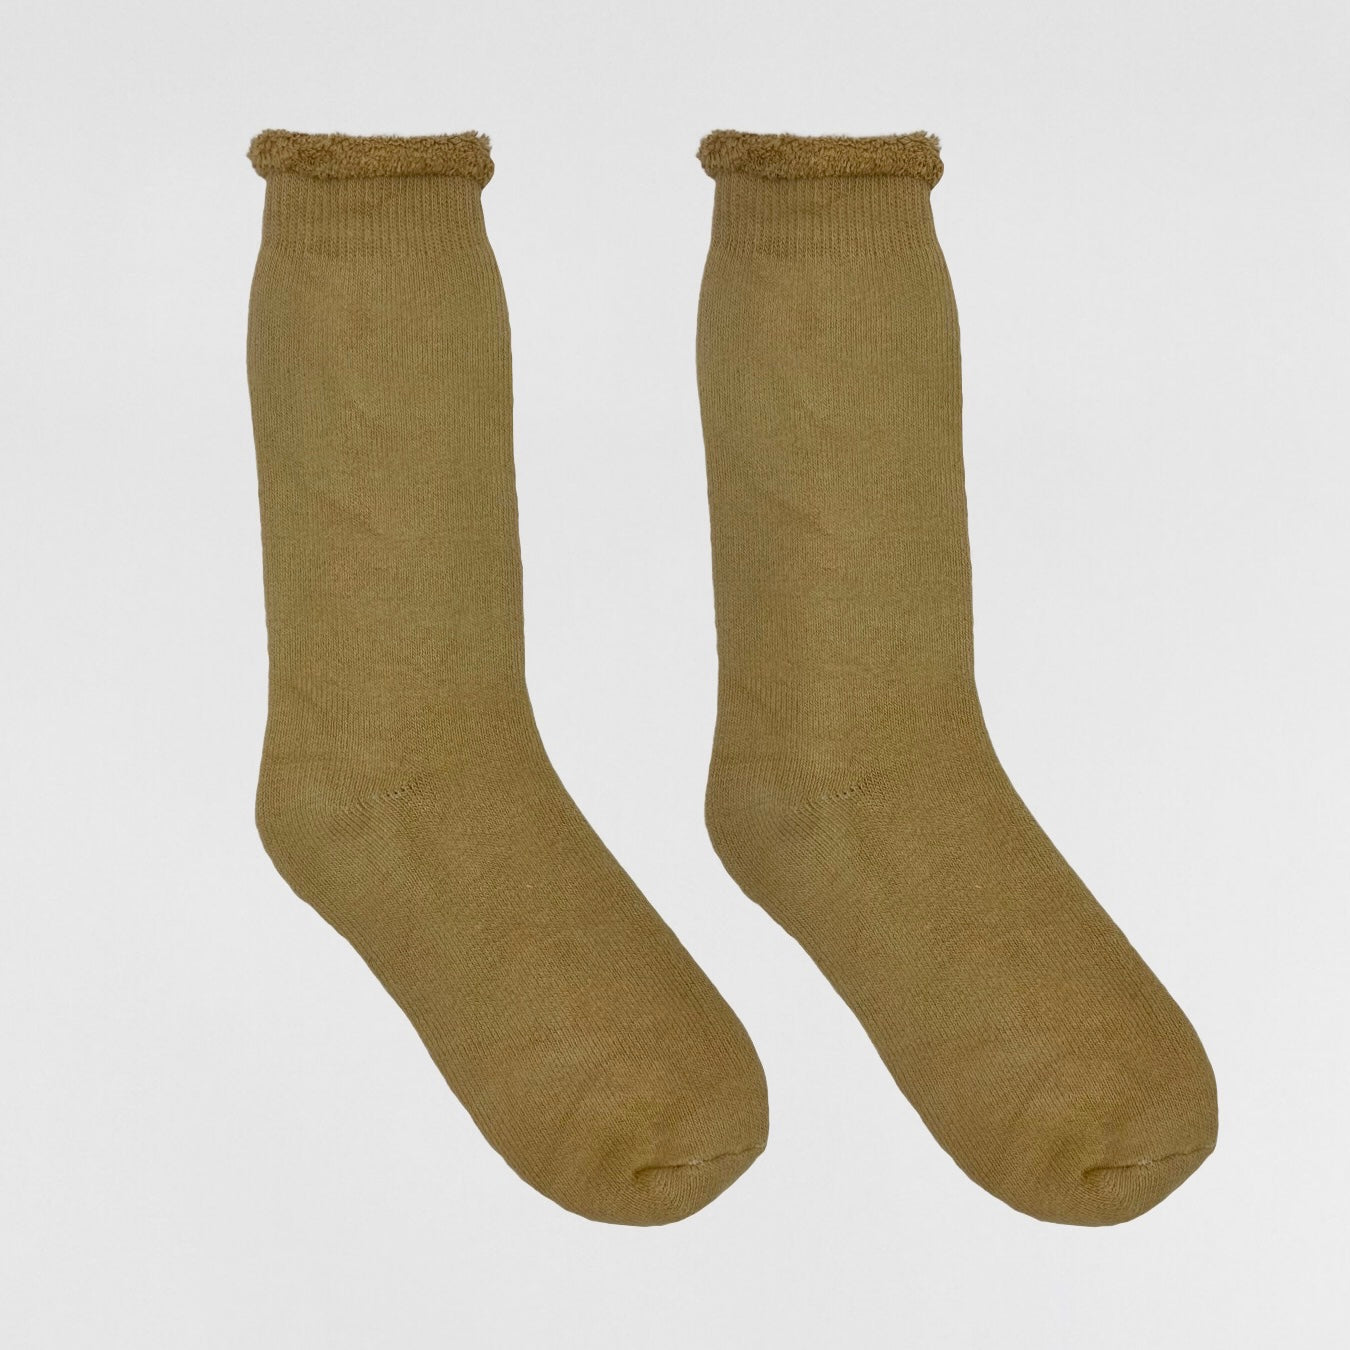 YZY 2020 Unreleased Wyoming Bouclette Sample Socks